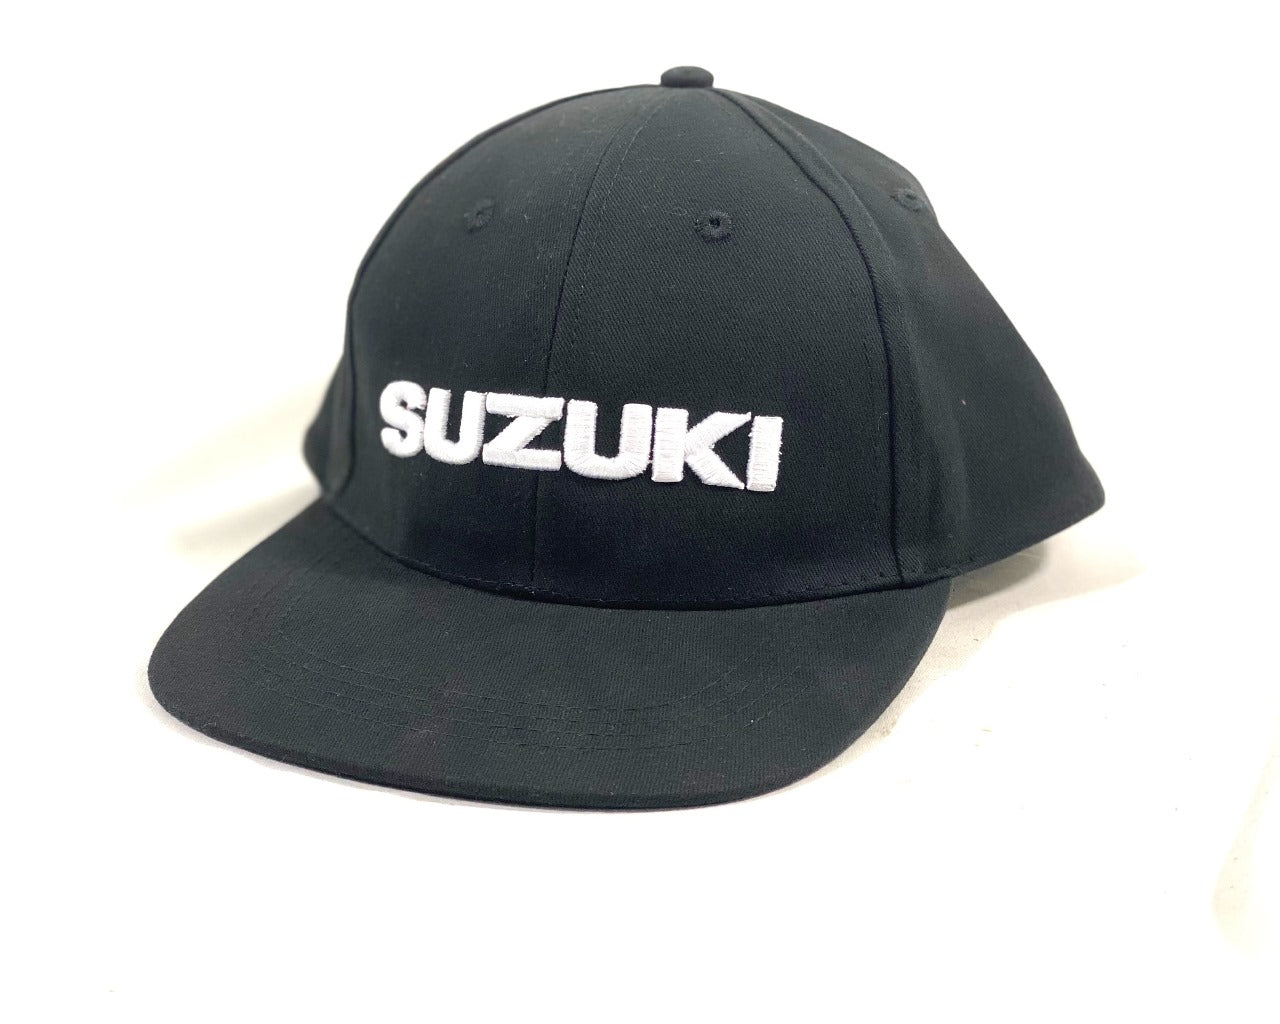 Suzuki Baseball Cap Black Snap Back 990A0-17202-BLK